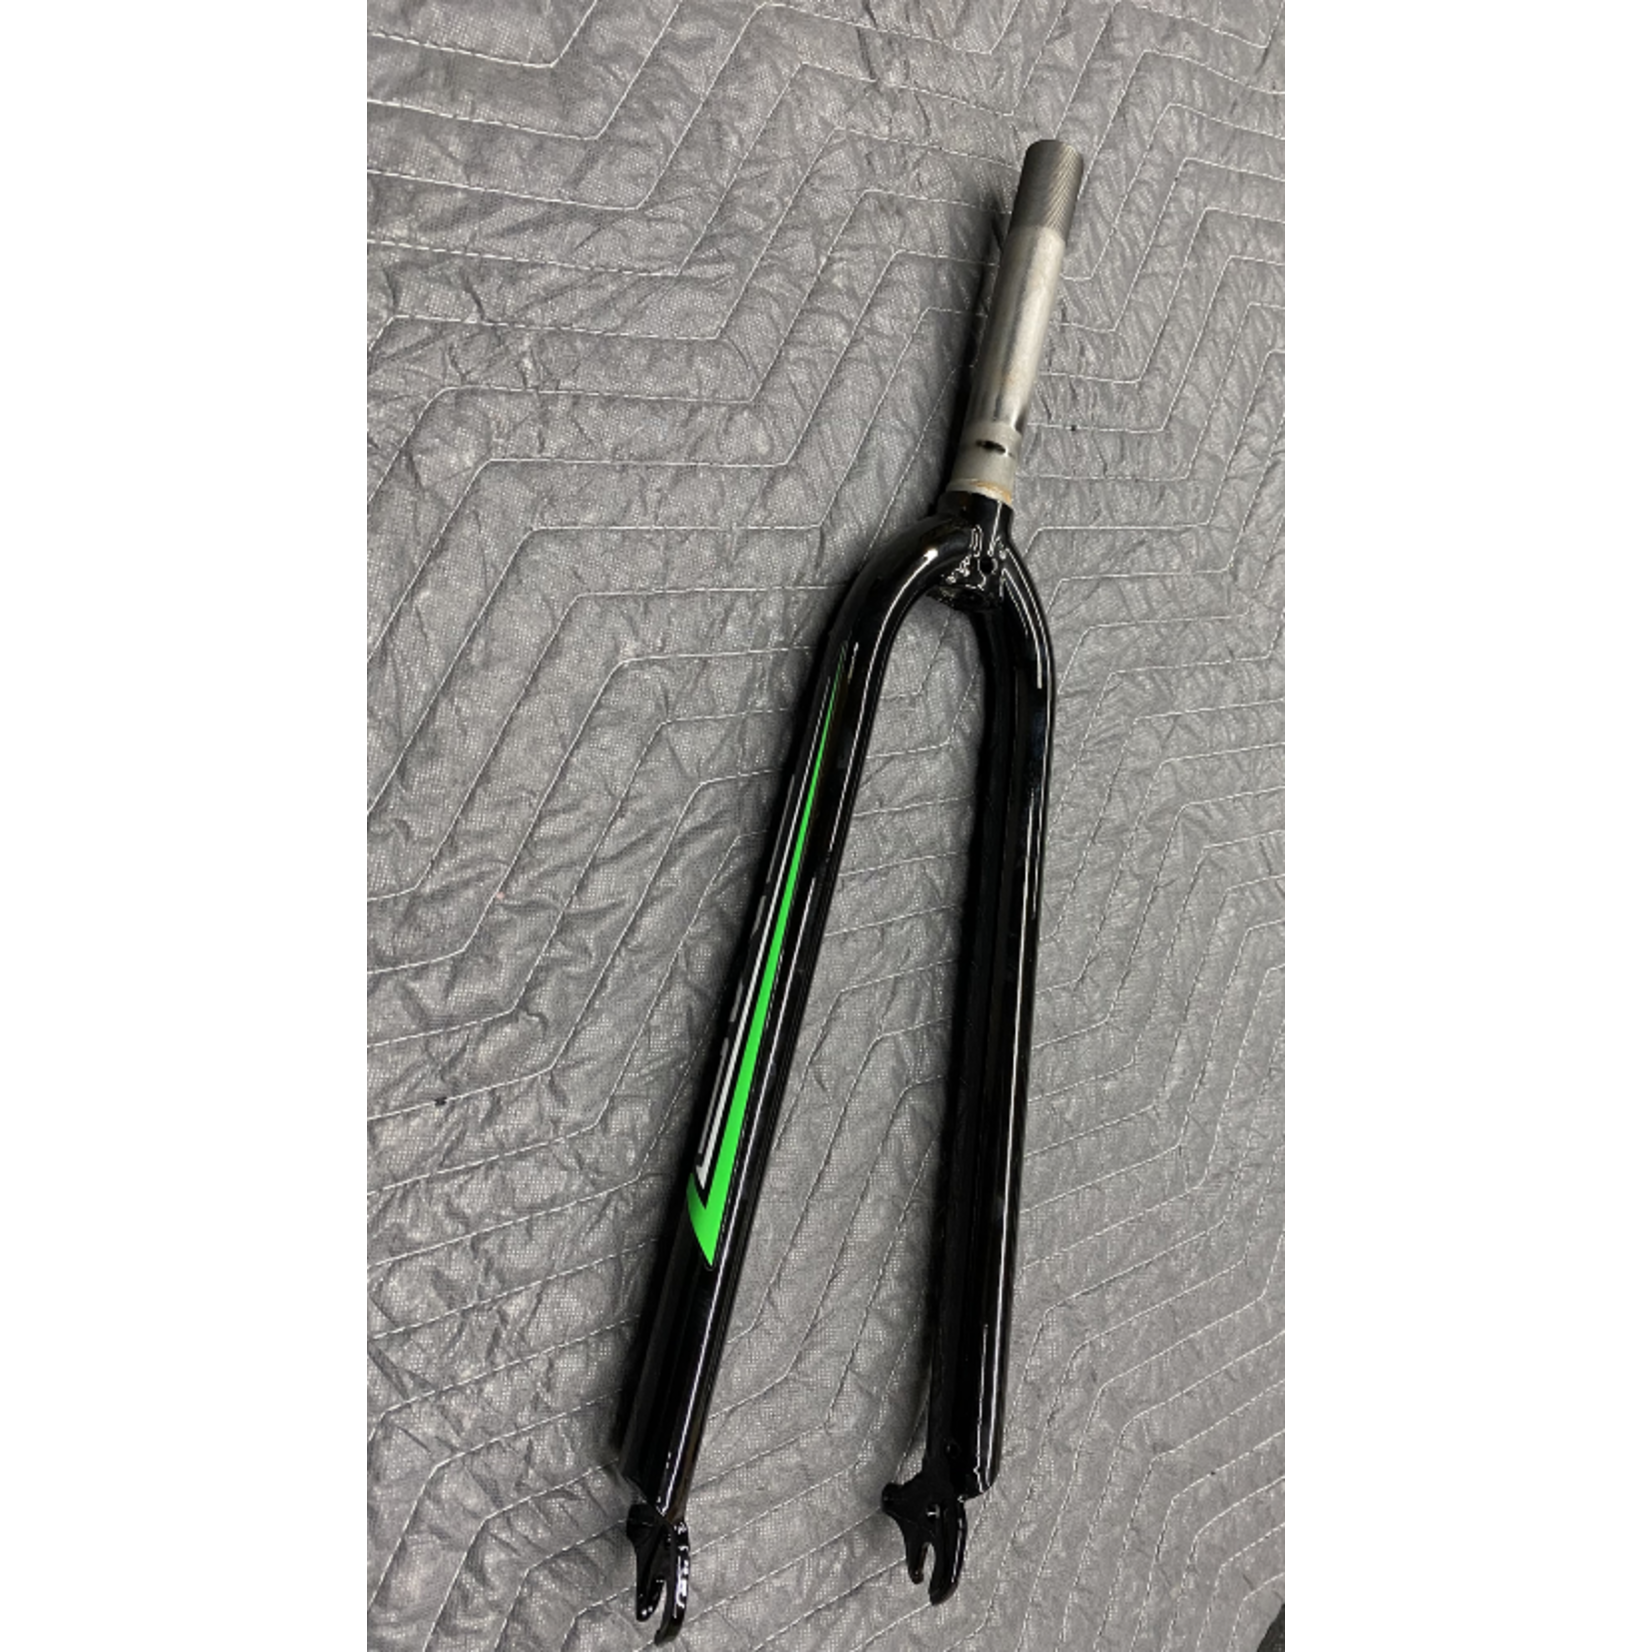 Threaded GMC 27” Bicycle Fork 1” x 5 3/4" Steer Tube (Black & Green)